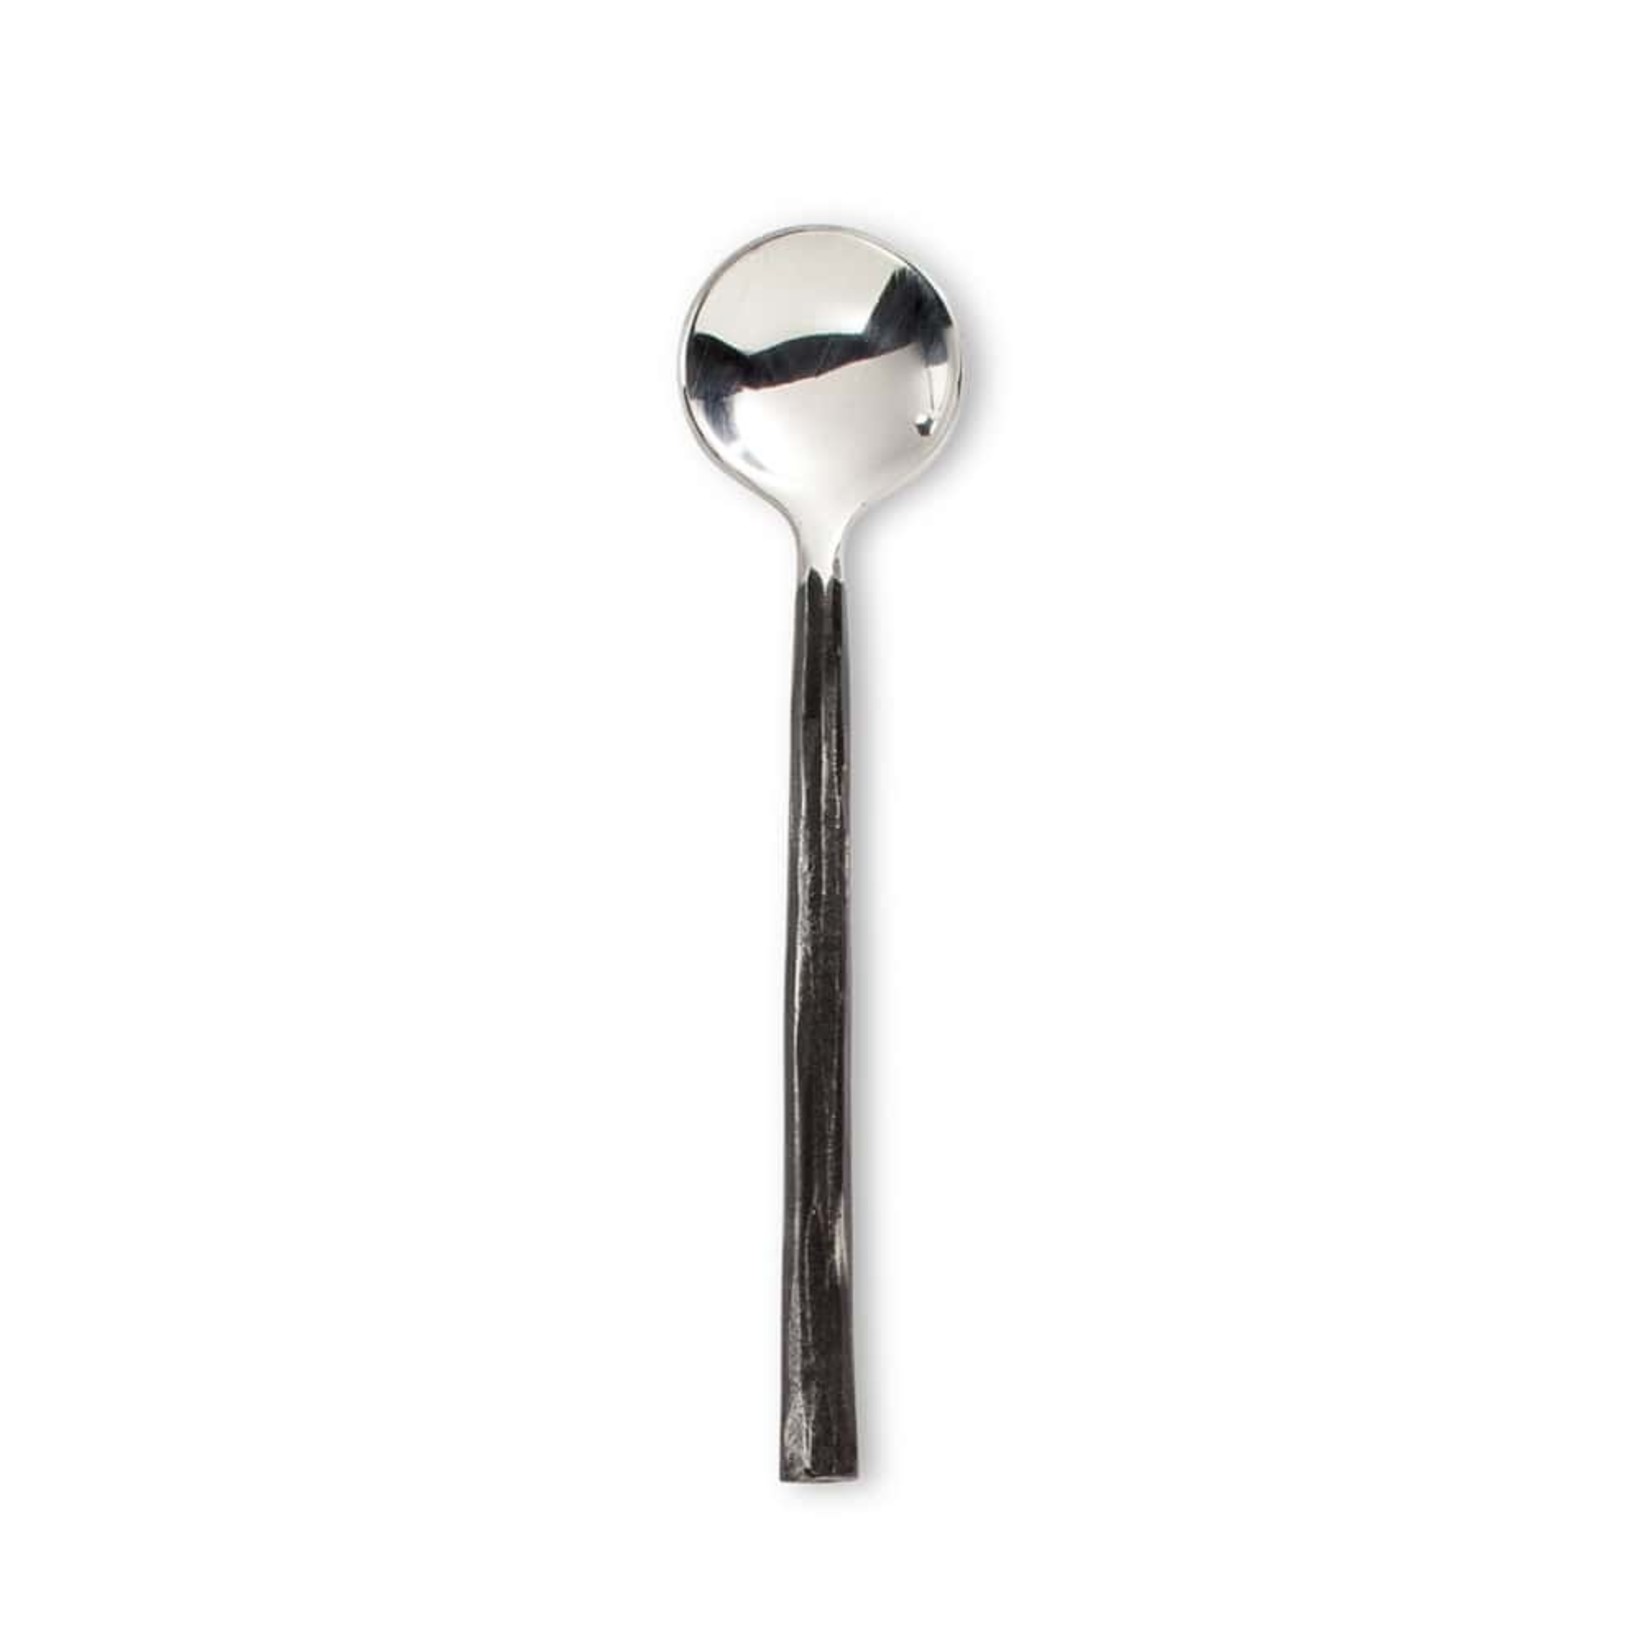 ABBOTT ABBOTT Small Spoon 4.5 - Iron DNR